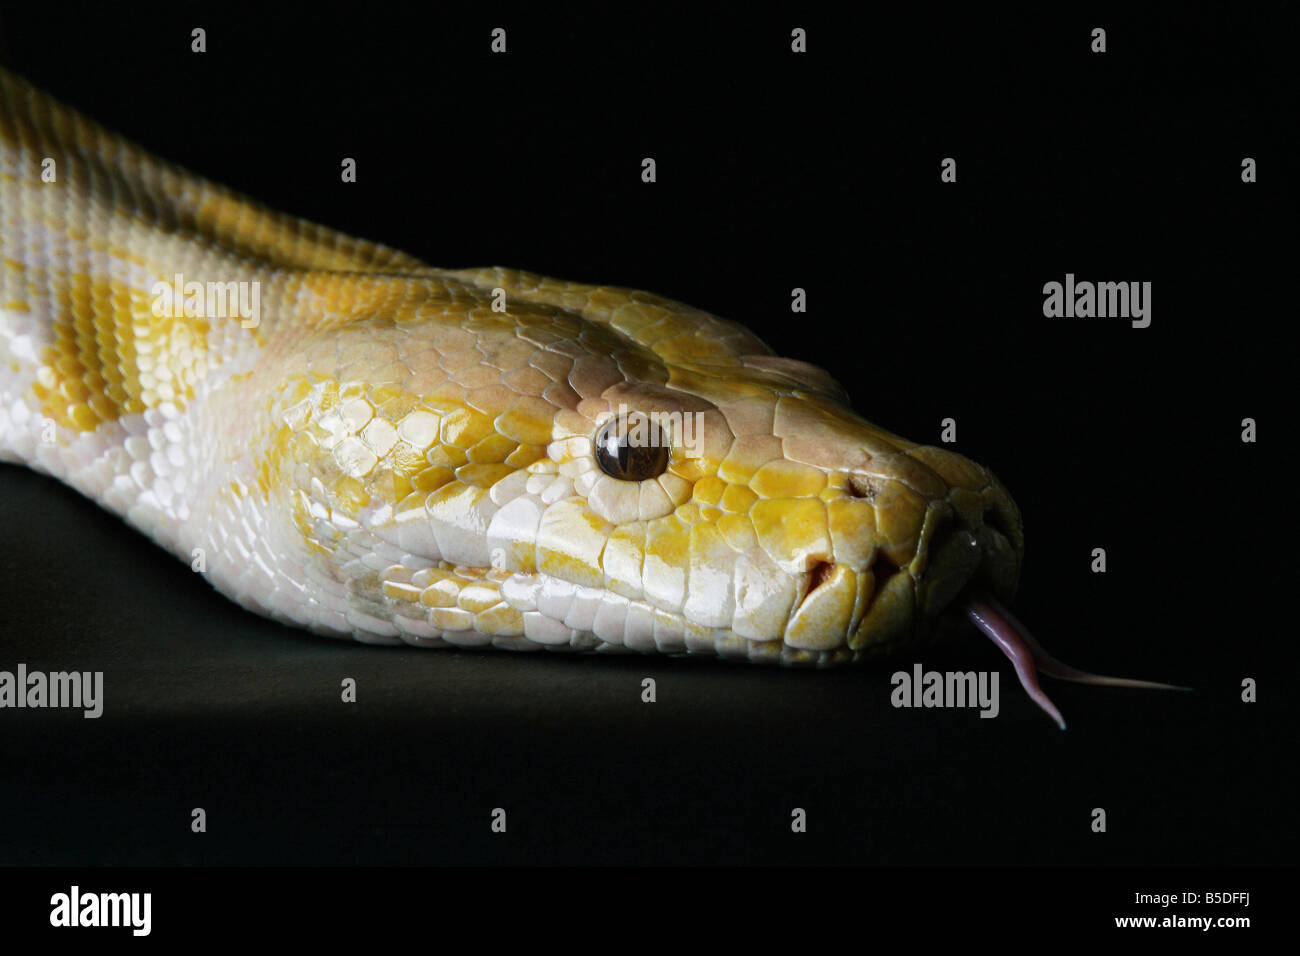 Male Albino Burmese Python snake on a black background Stock Photo